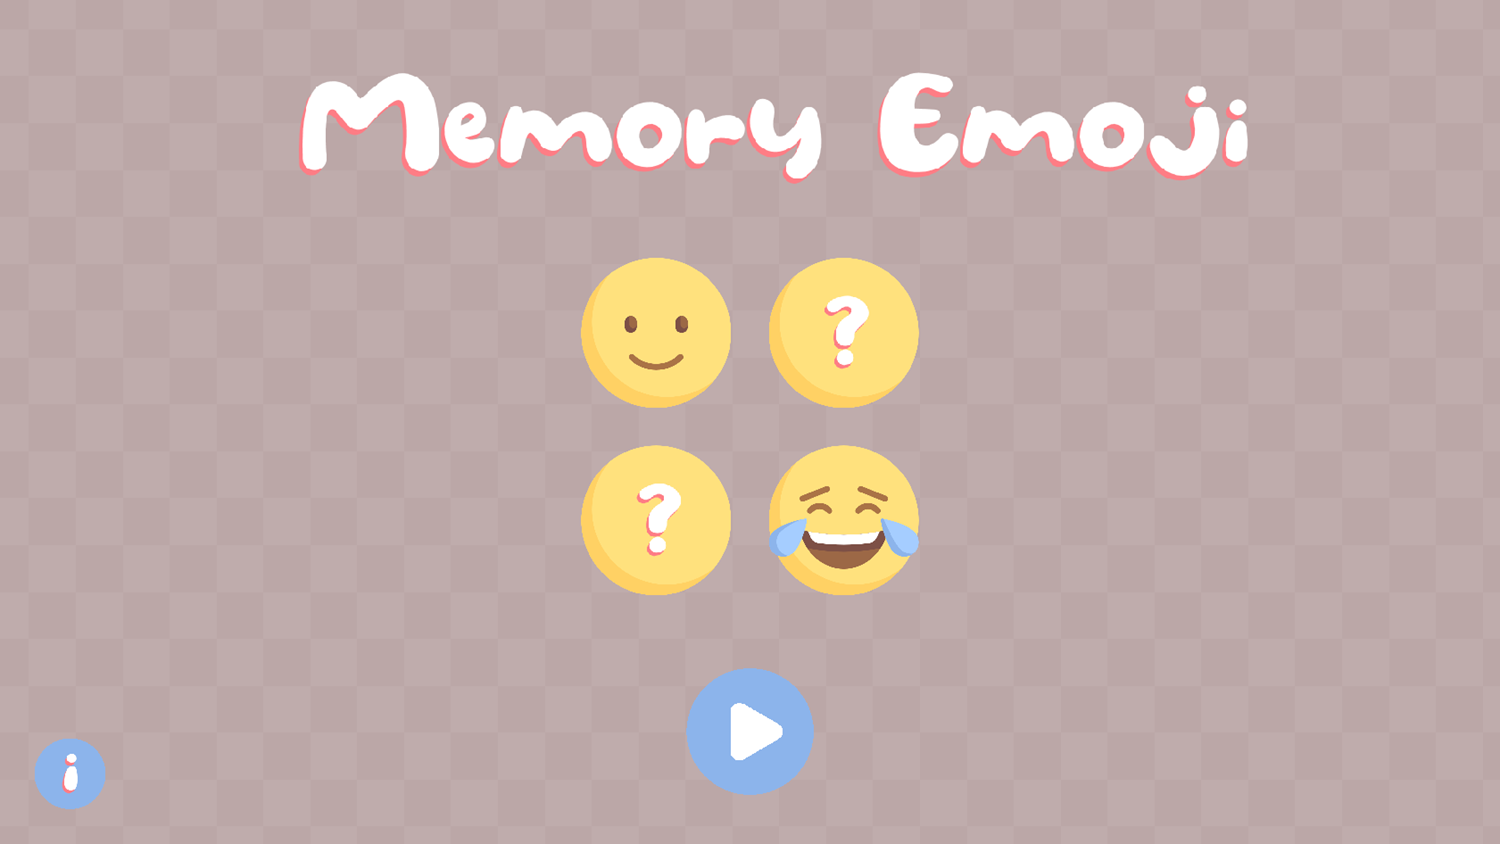 Memory Emoji Game Welcome Screen Screenshot.